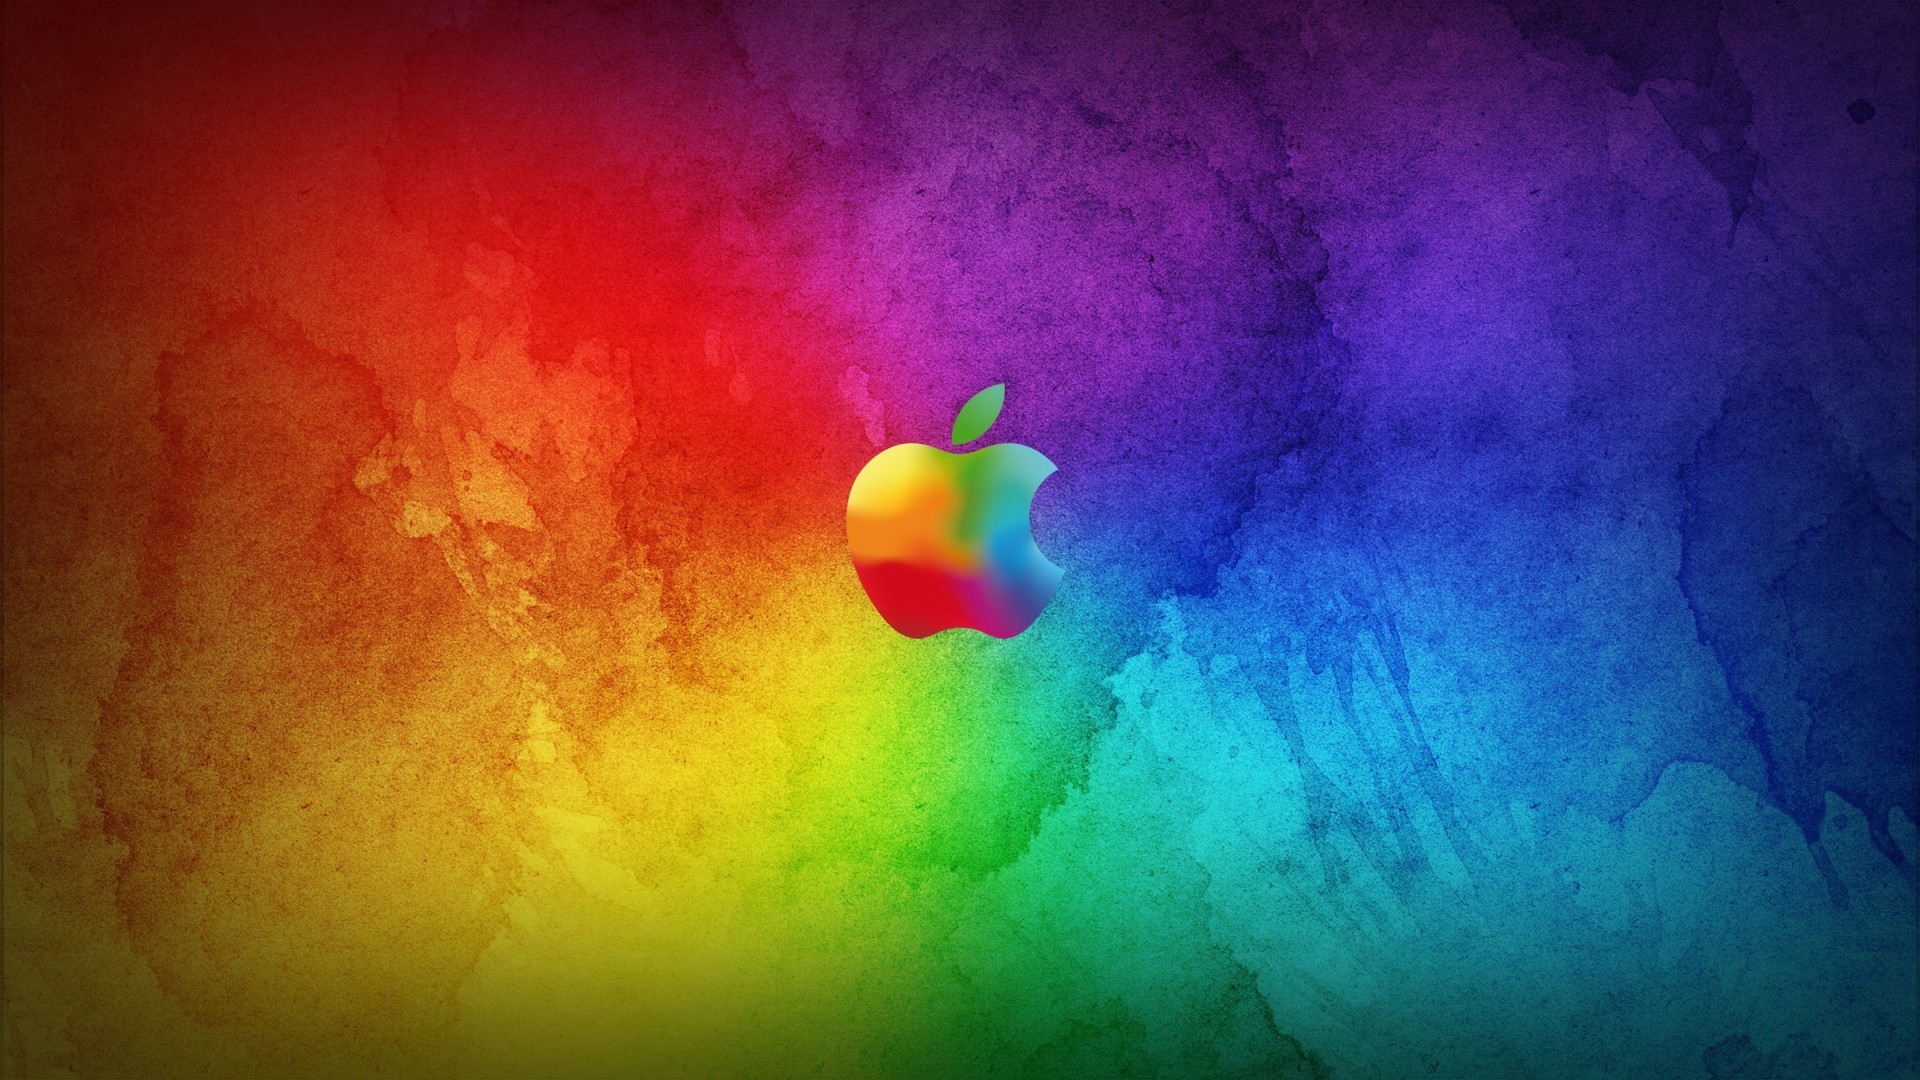 HD Apple Wallpaper 1080p Image